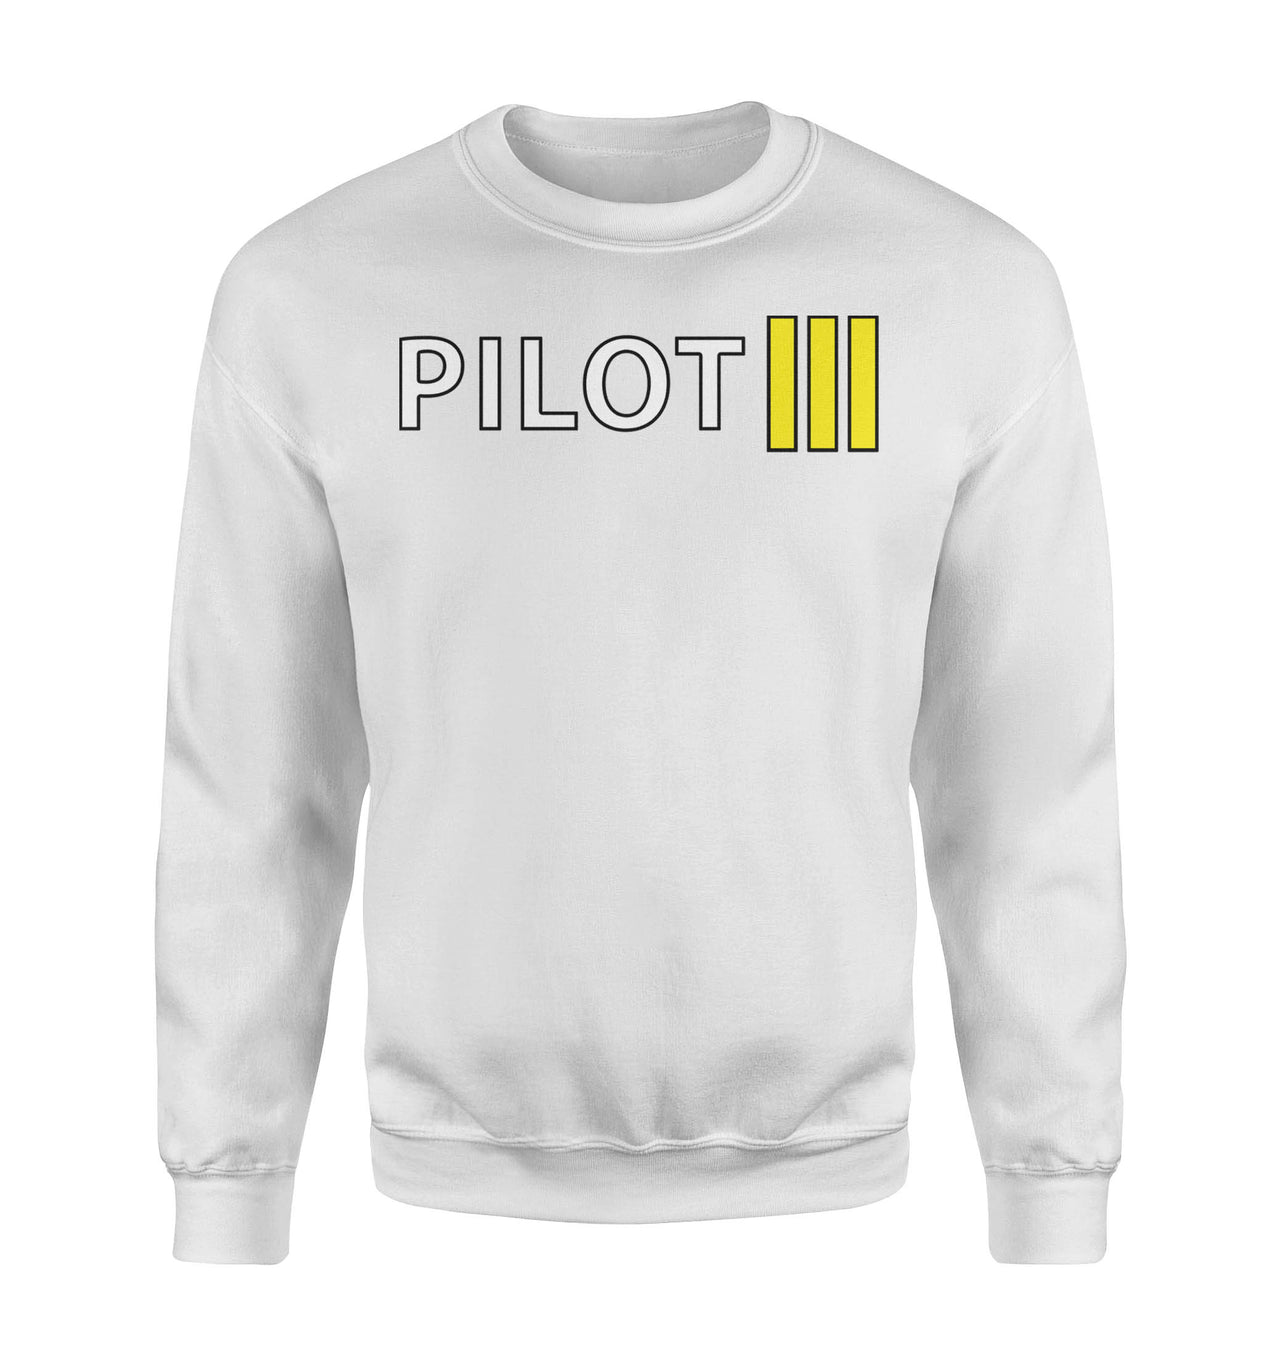 Pilot & Stripes (3 Lines) Designed Sweatshirts